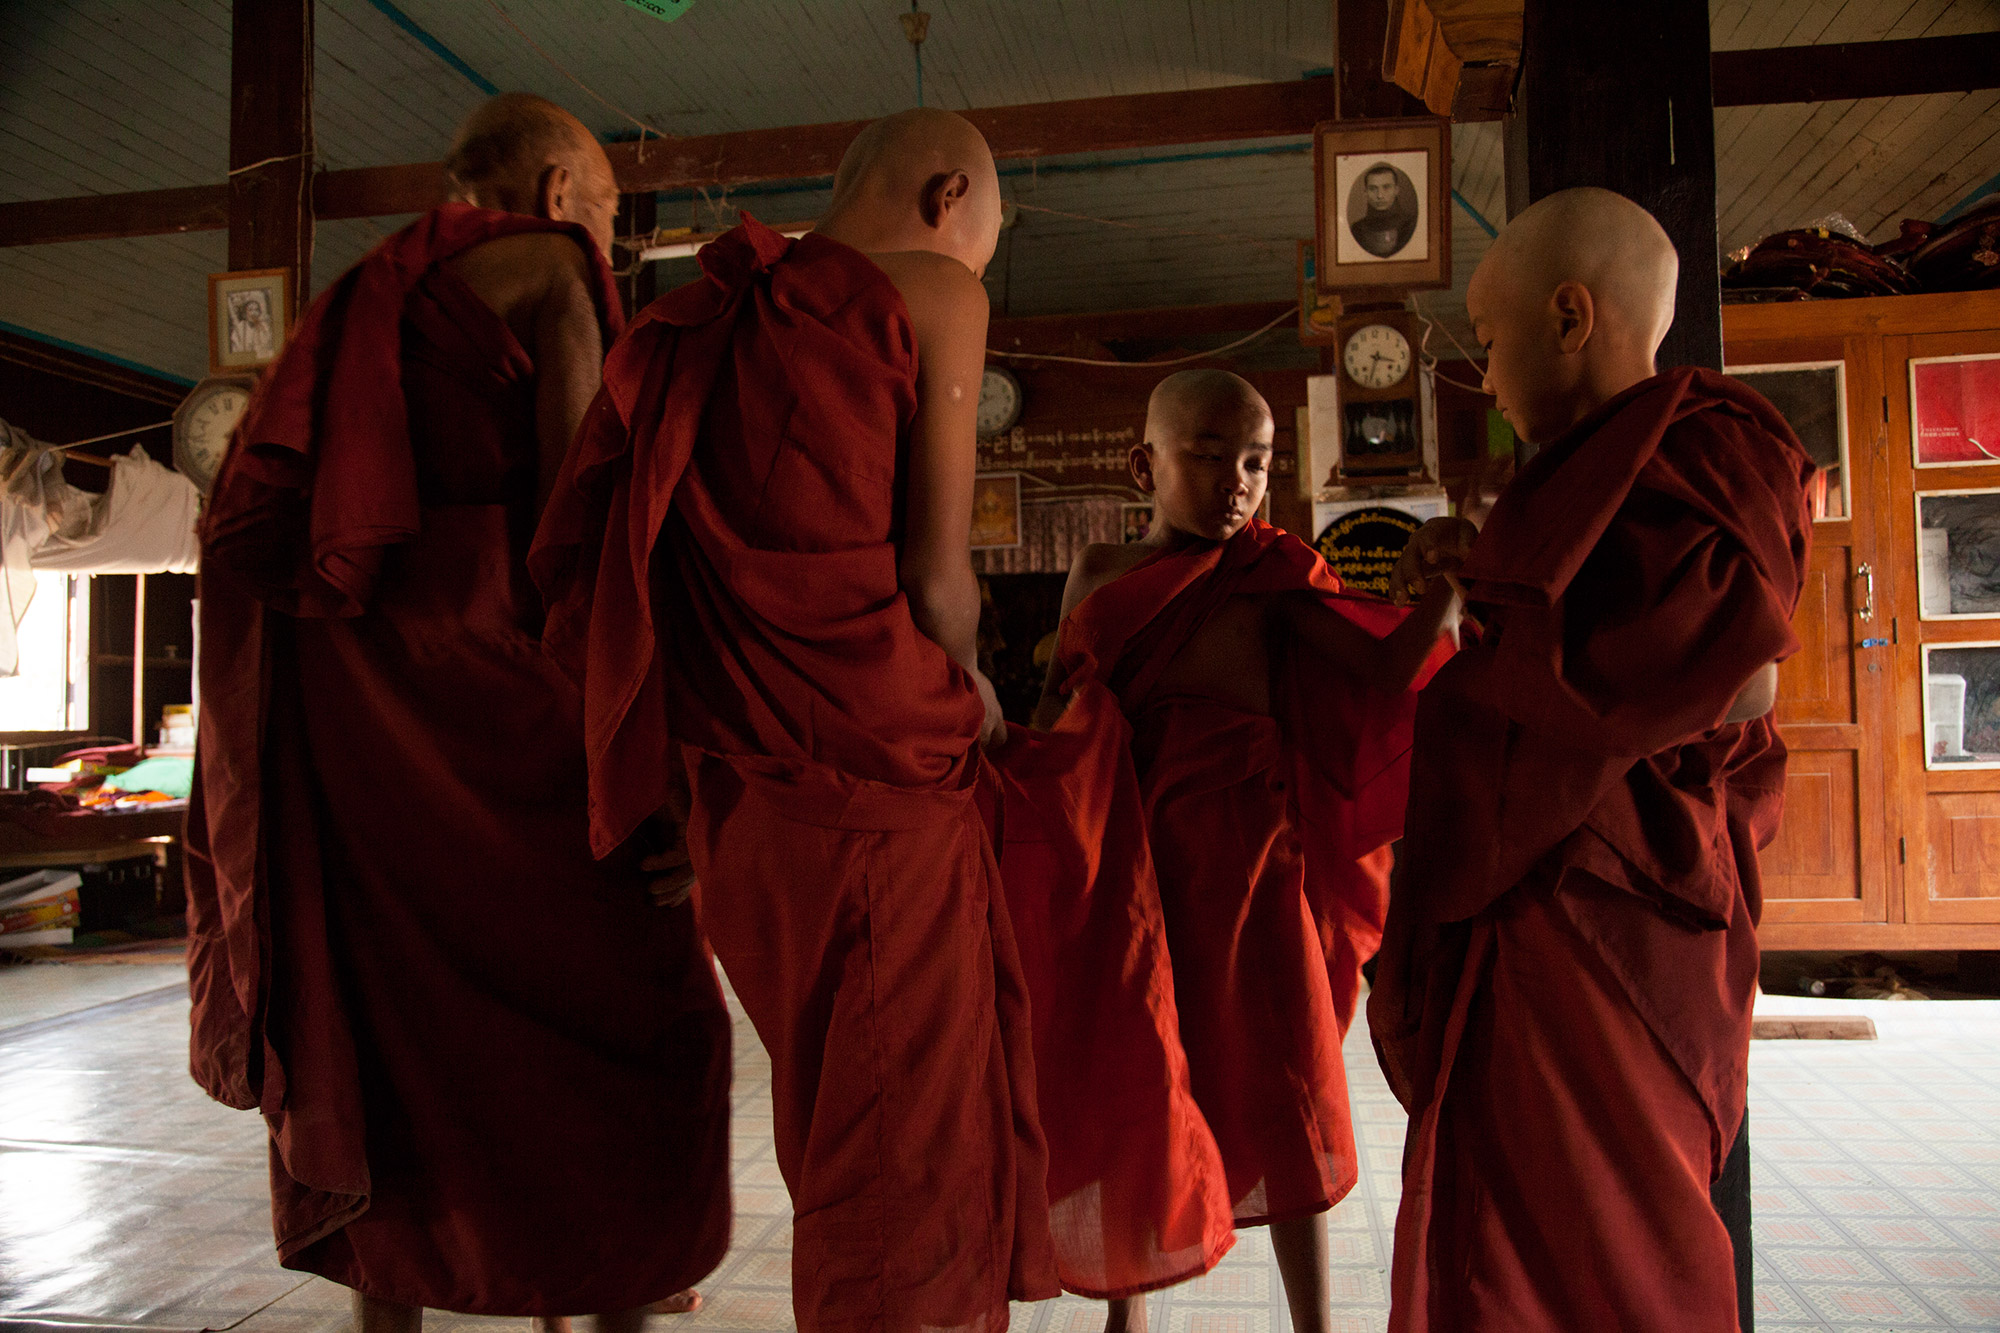 Novice Monks in New Robes